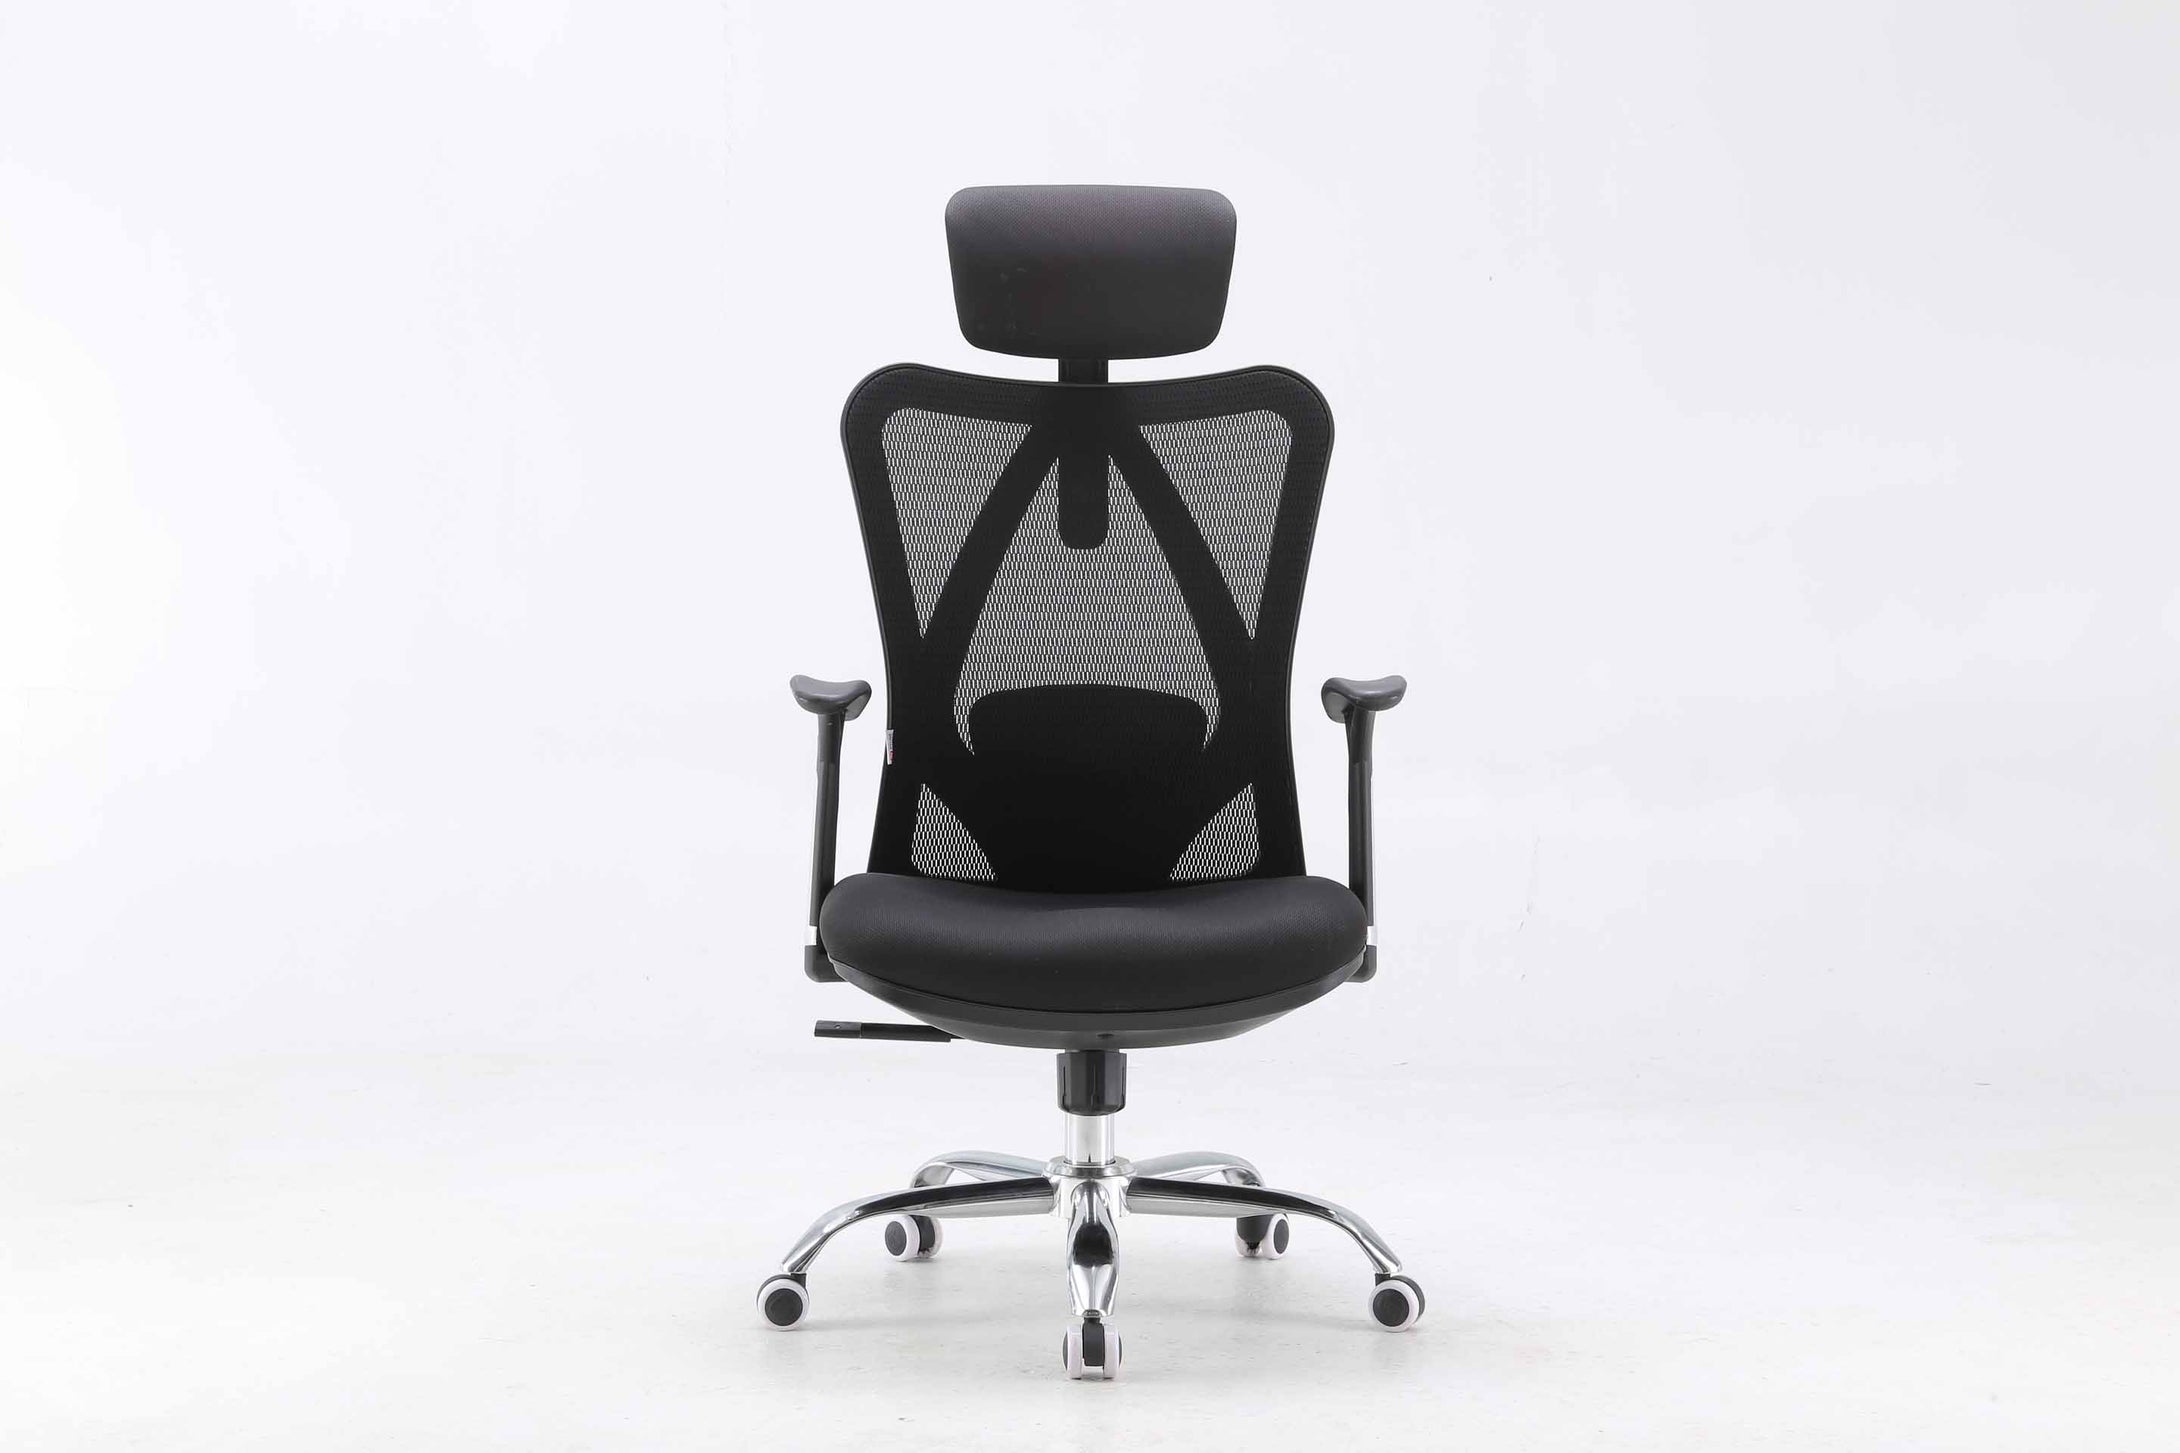 SIHOO M16 Ergonomics Office Chair